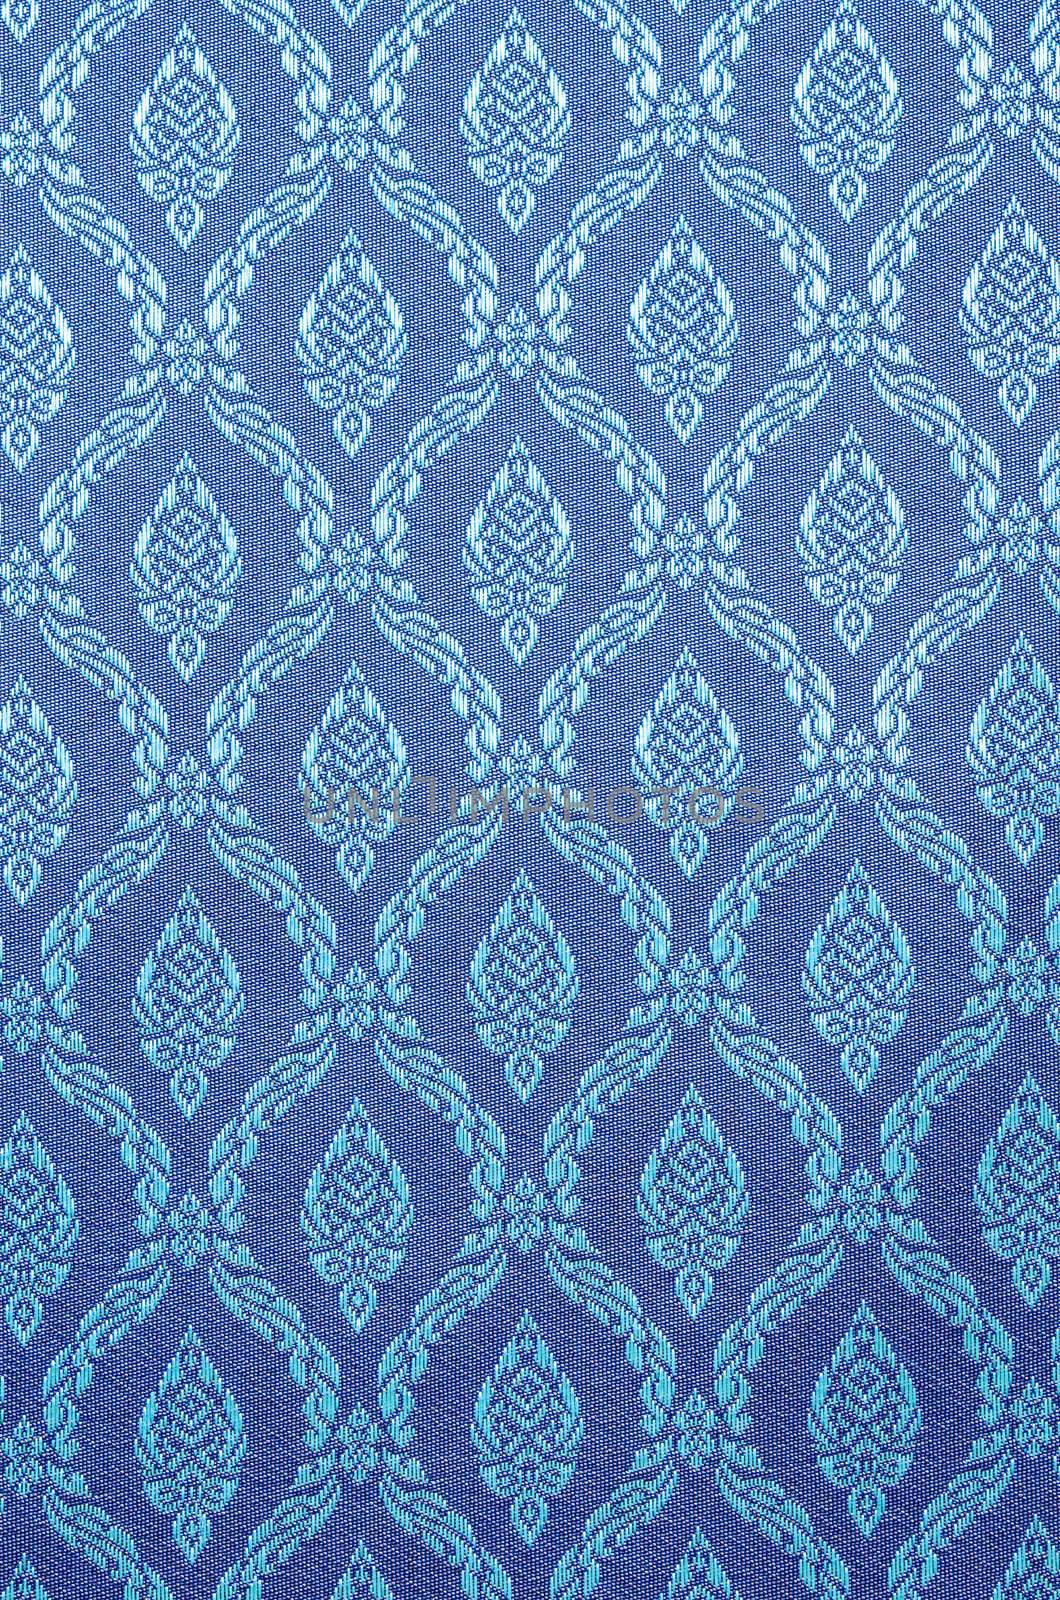 Thai art blue wall pattern. by Gamjai